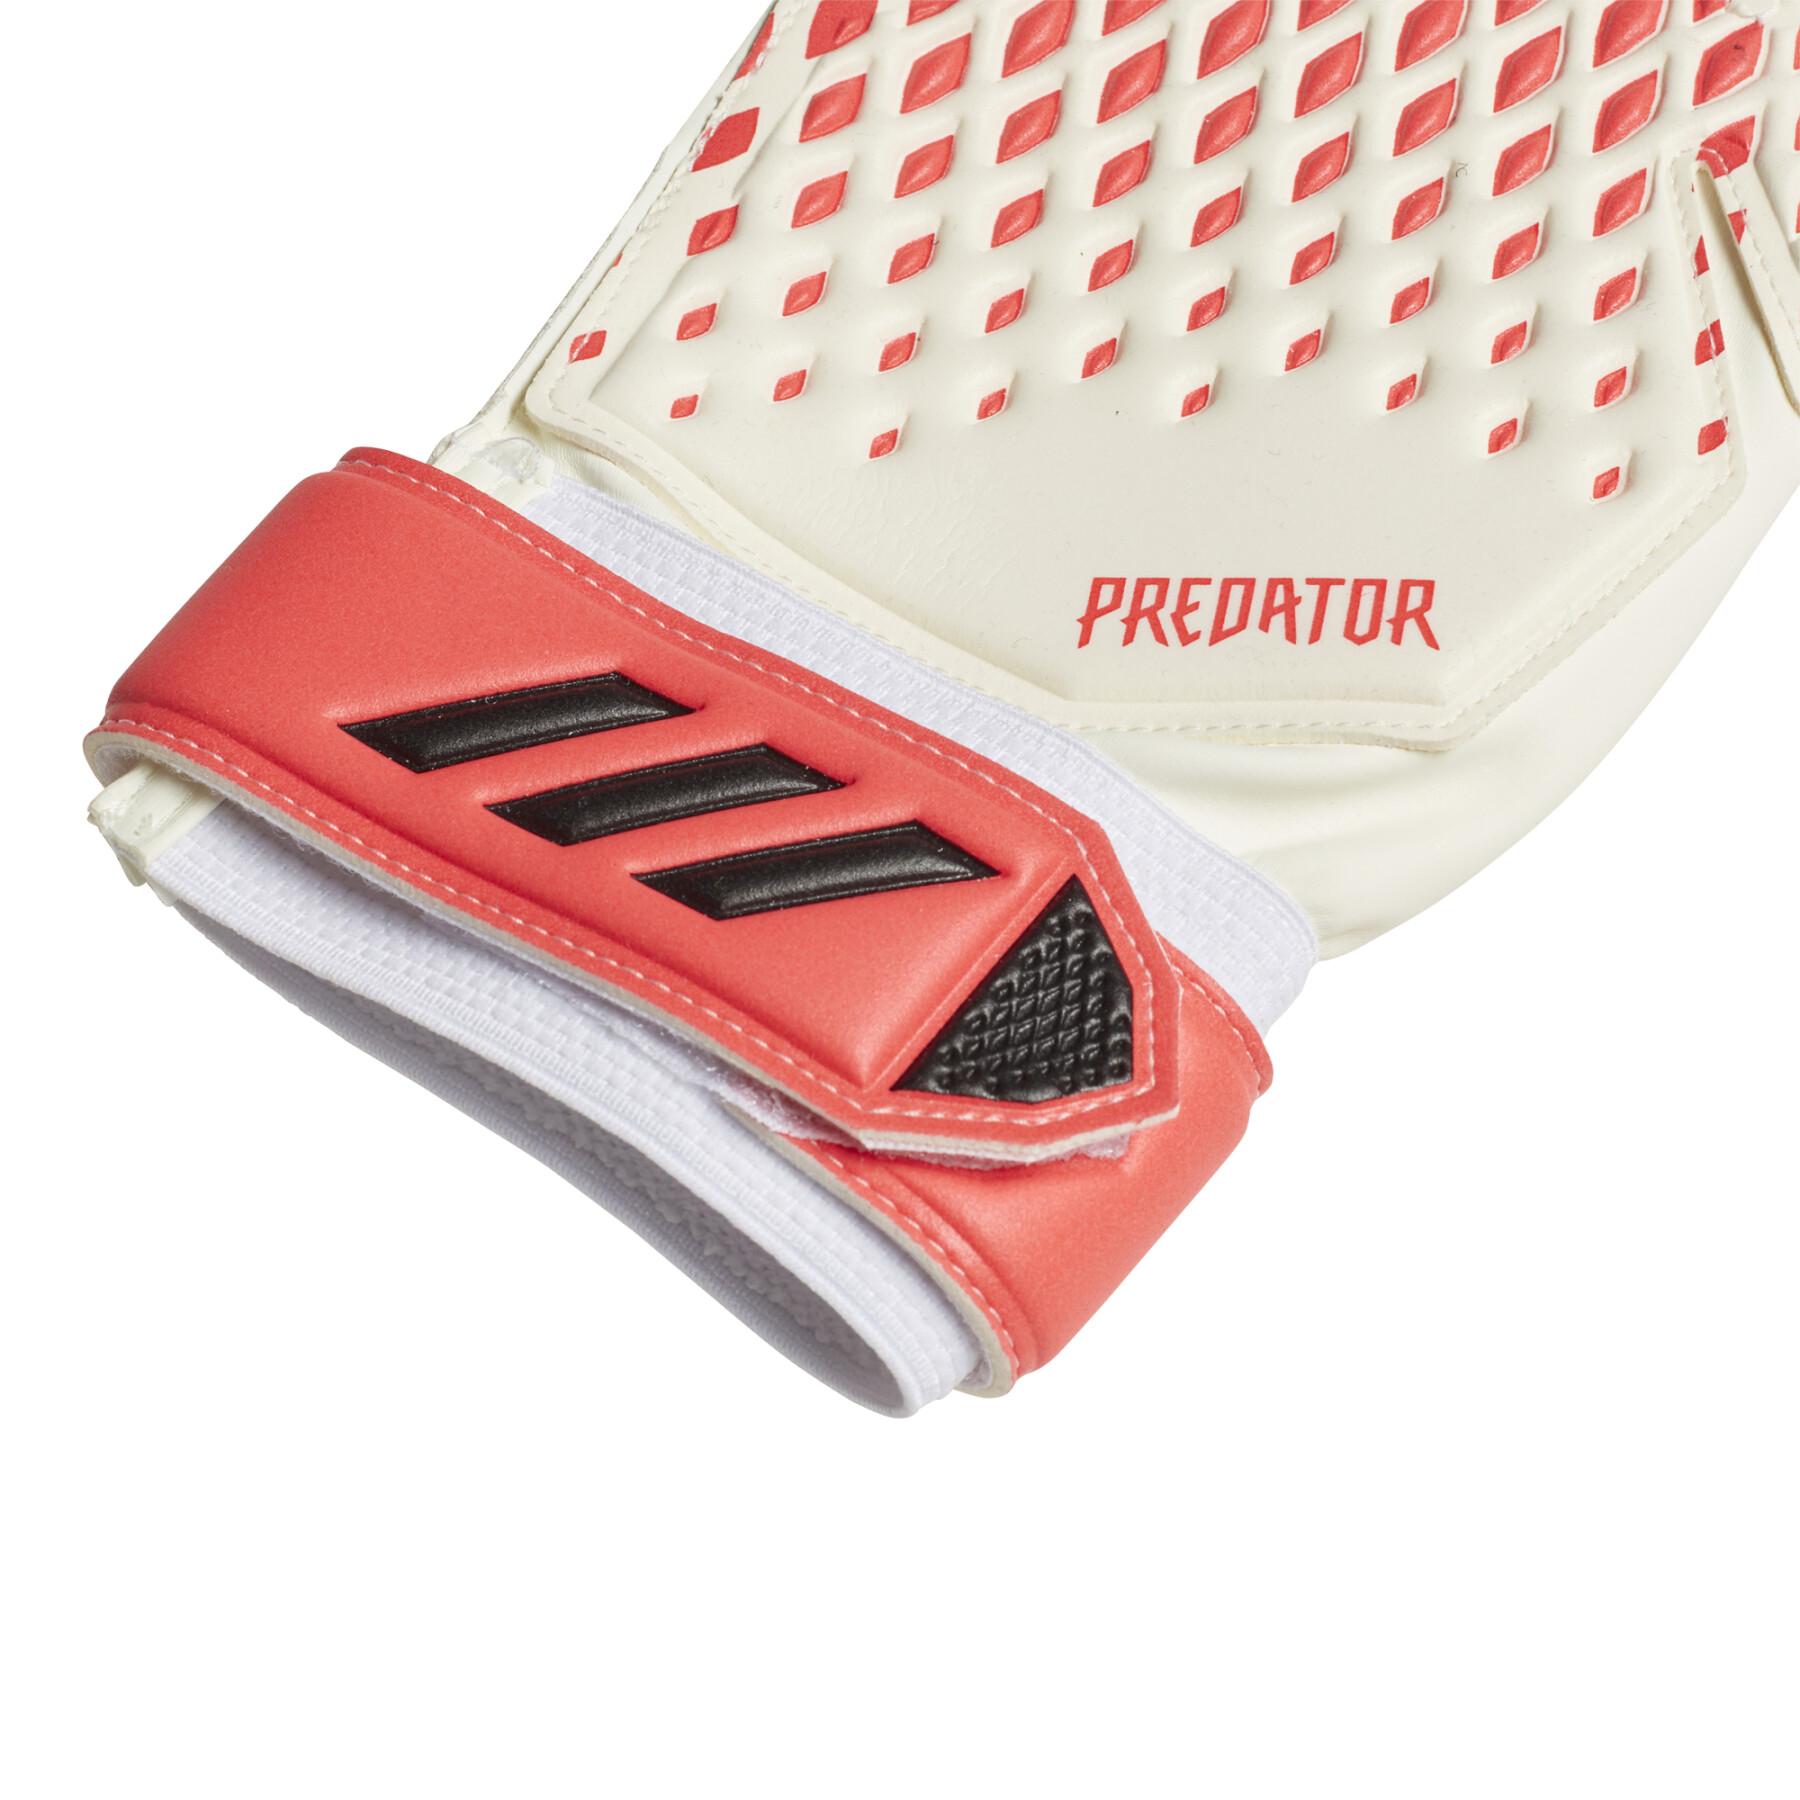 Keepershandschoenen adidas Predator 20 Training